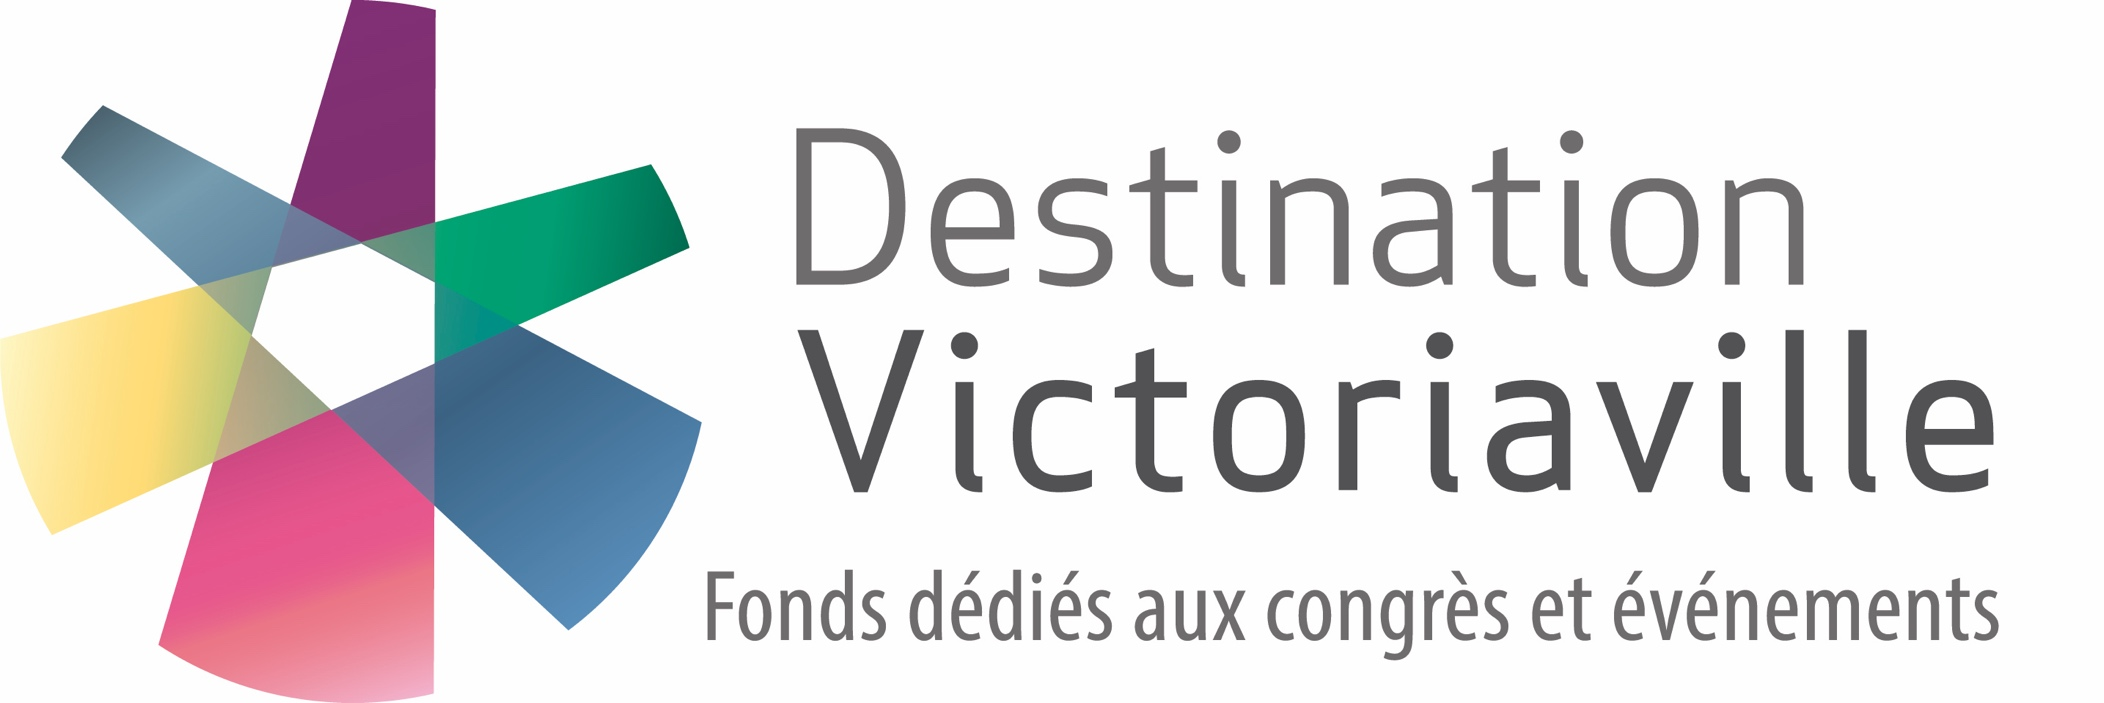 logo_destination_victoriaville 